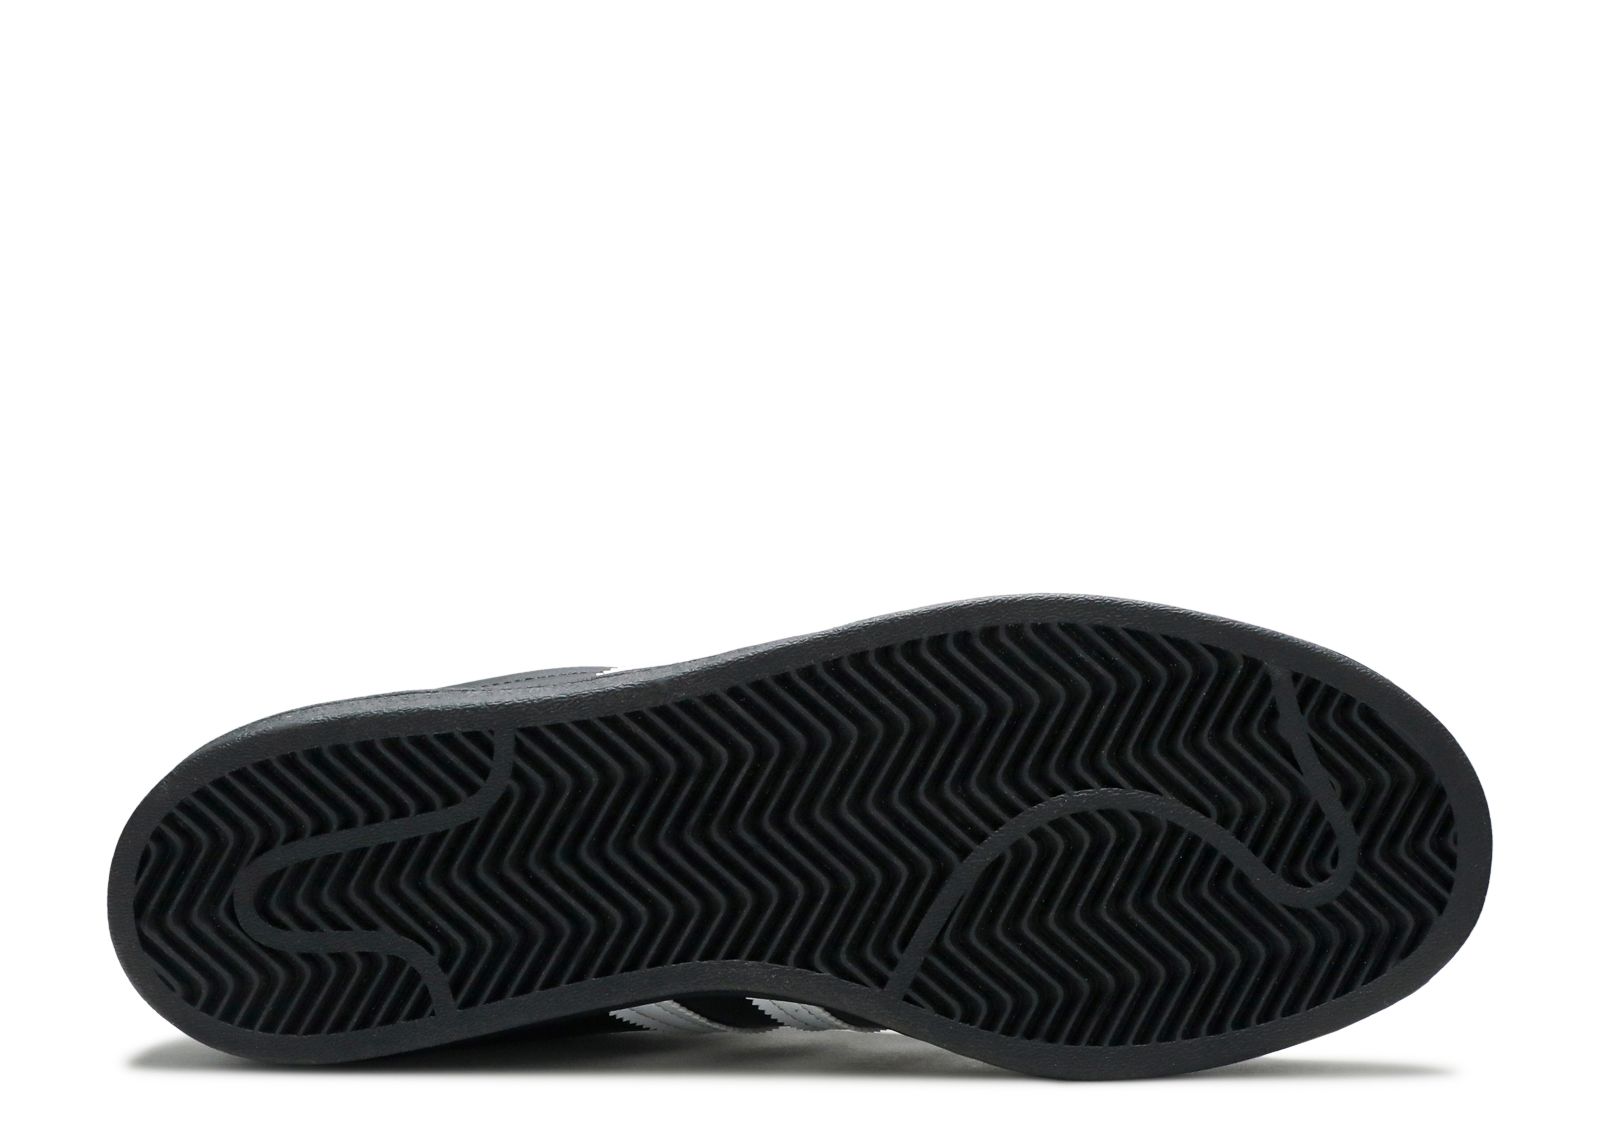 Superstar \'Core Black White\' - Adidas - EG4959 - core black/footwear white  | Flight Club